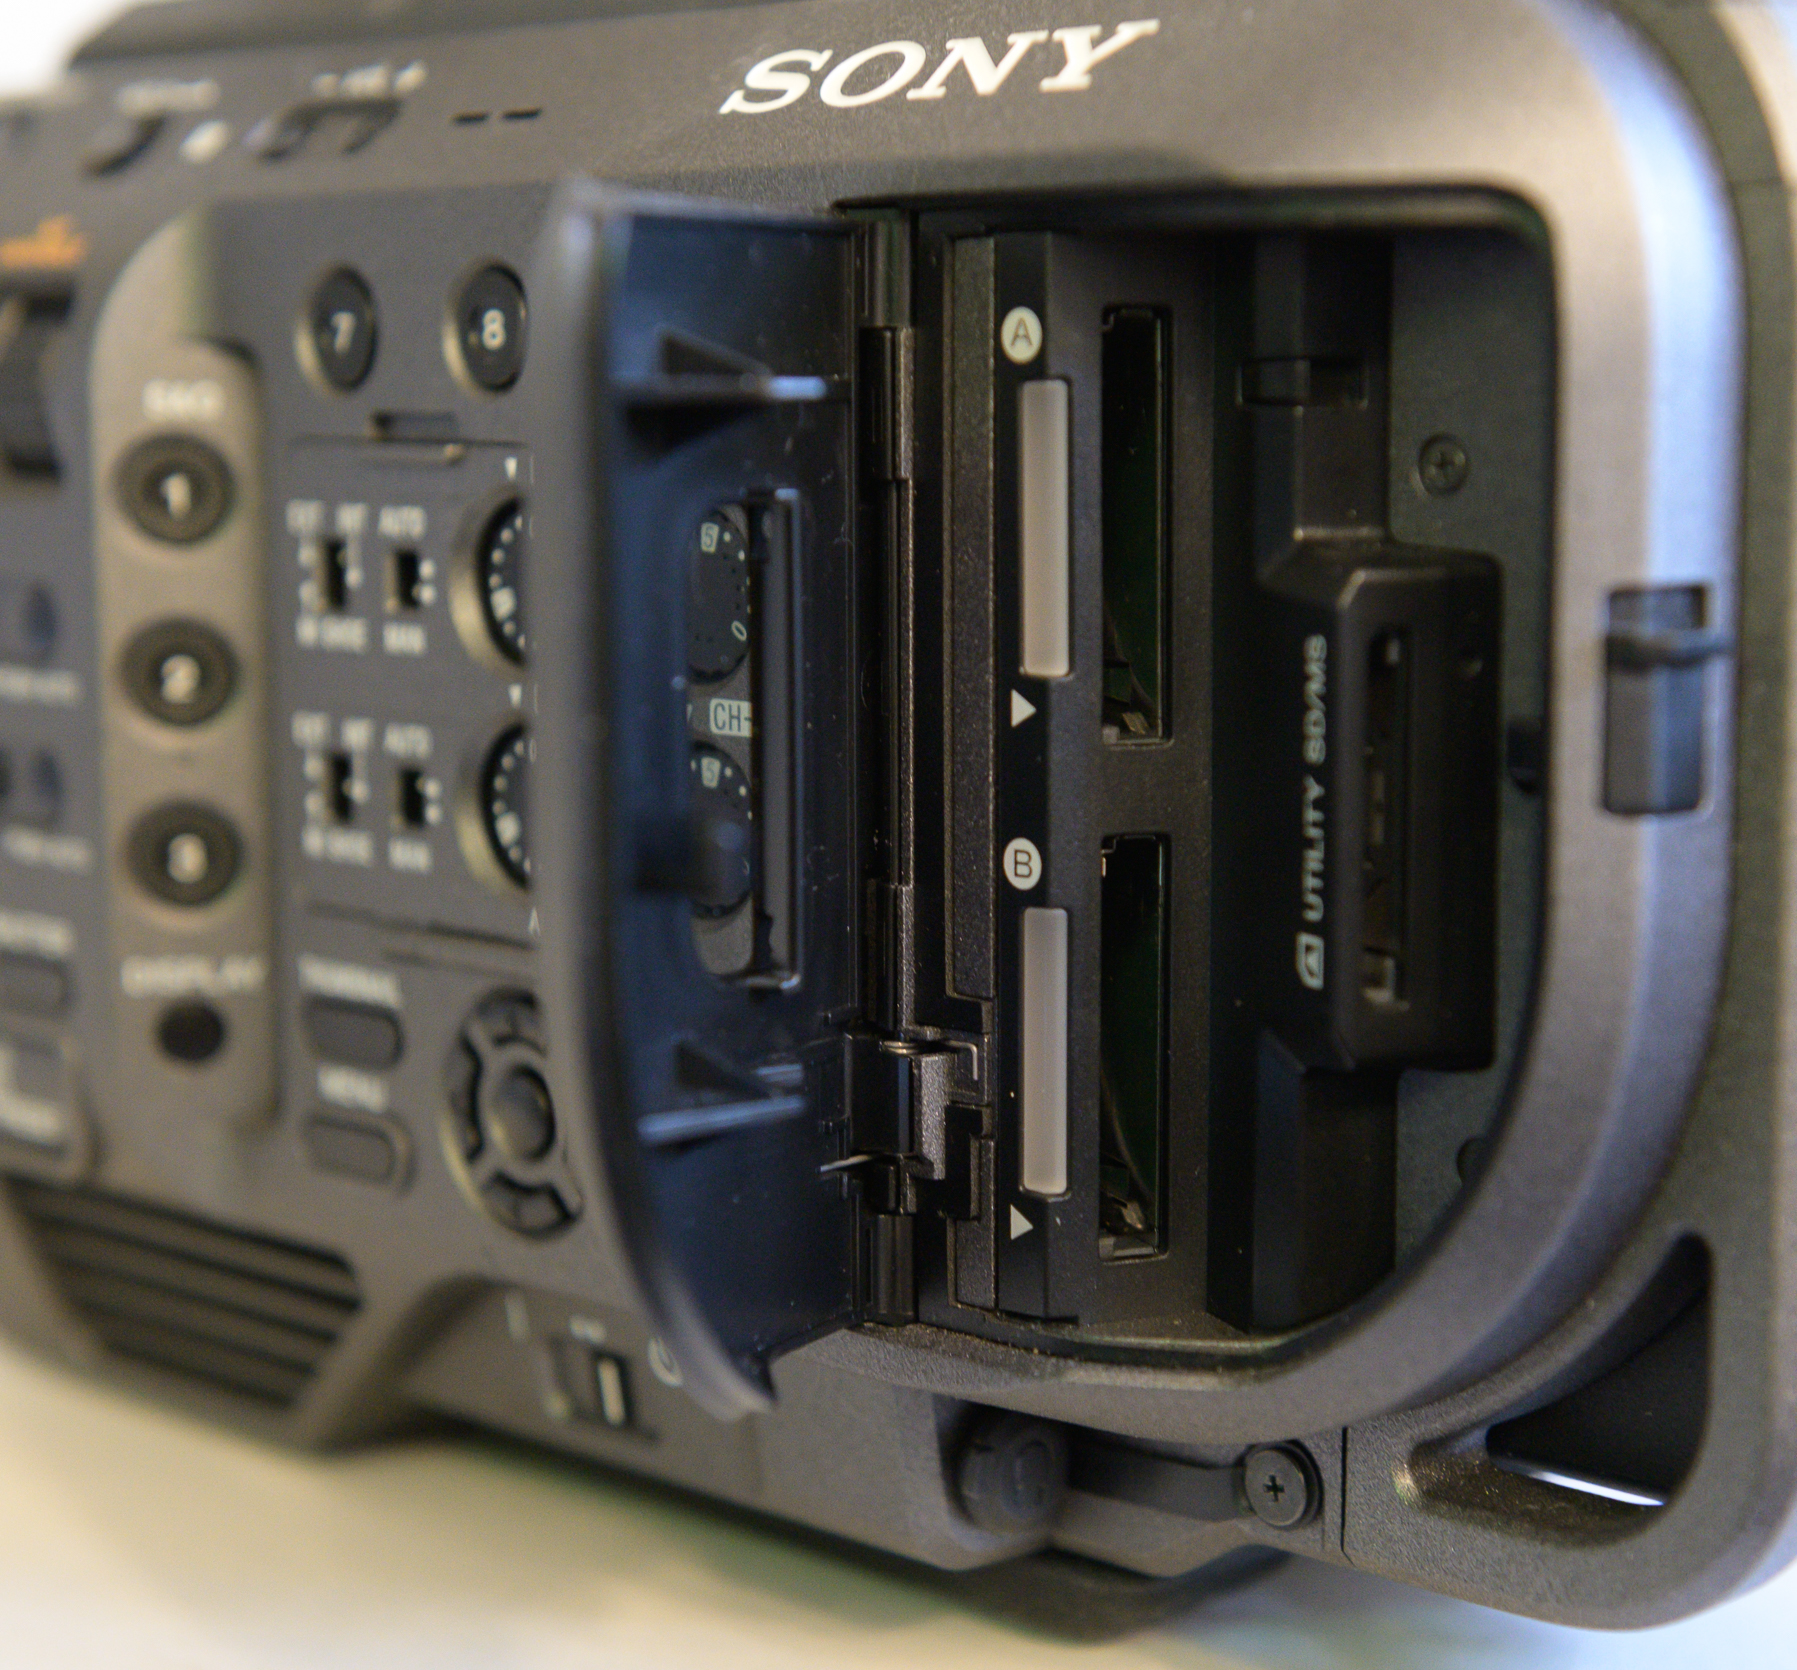 Sony FX9